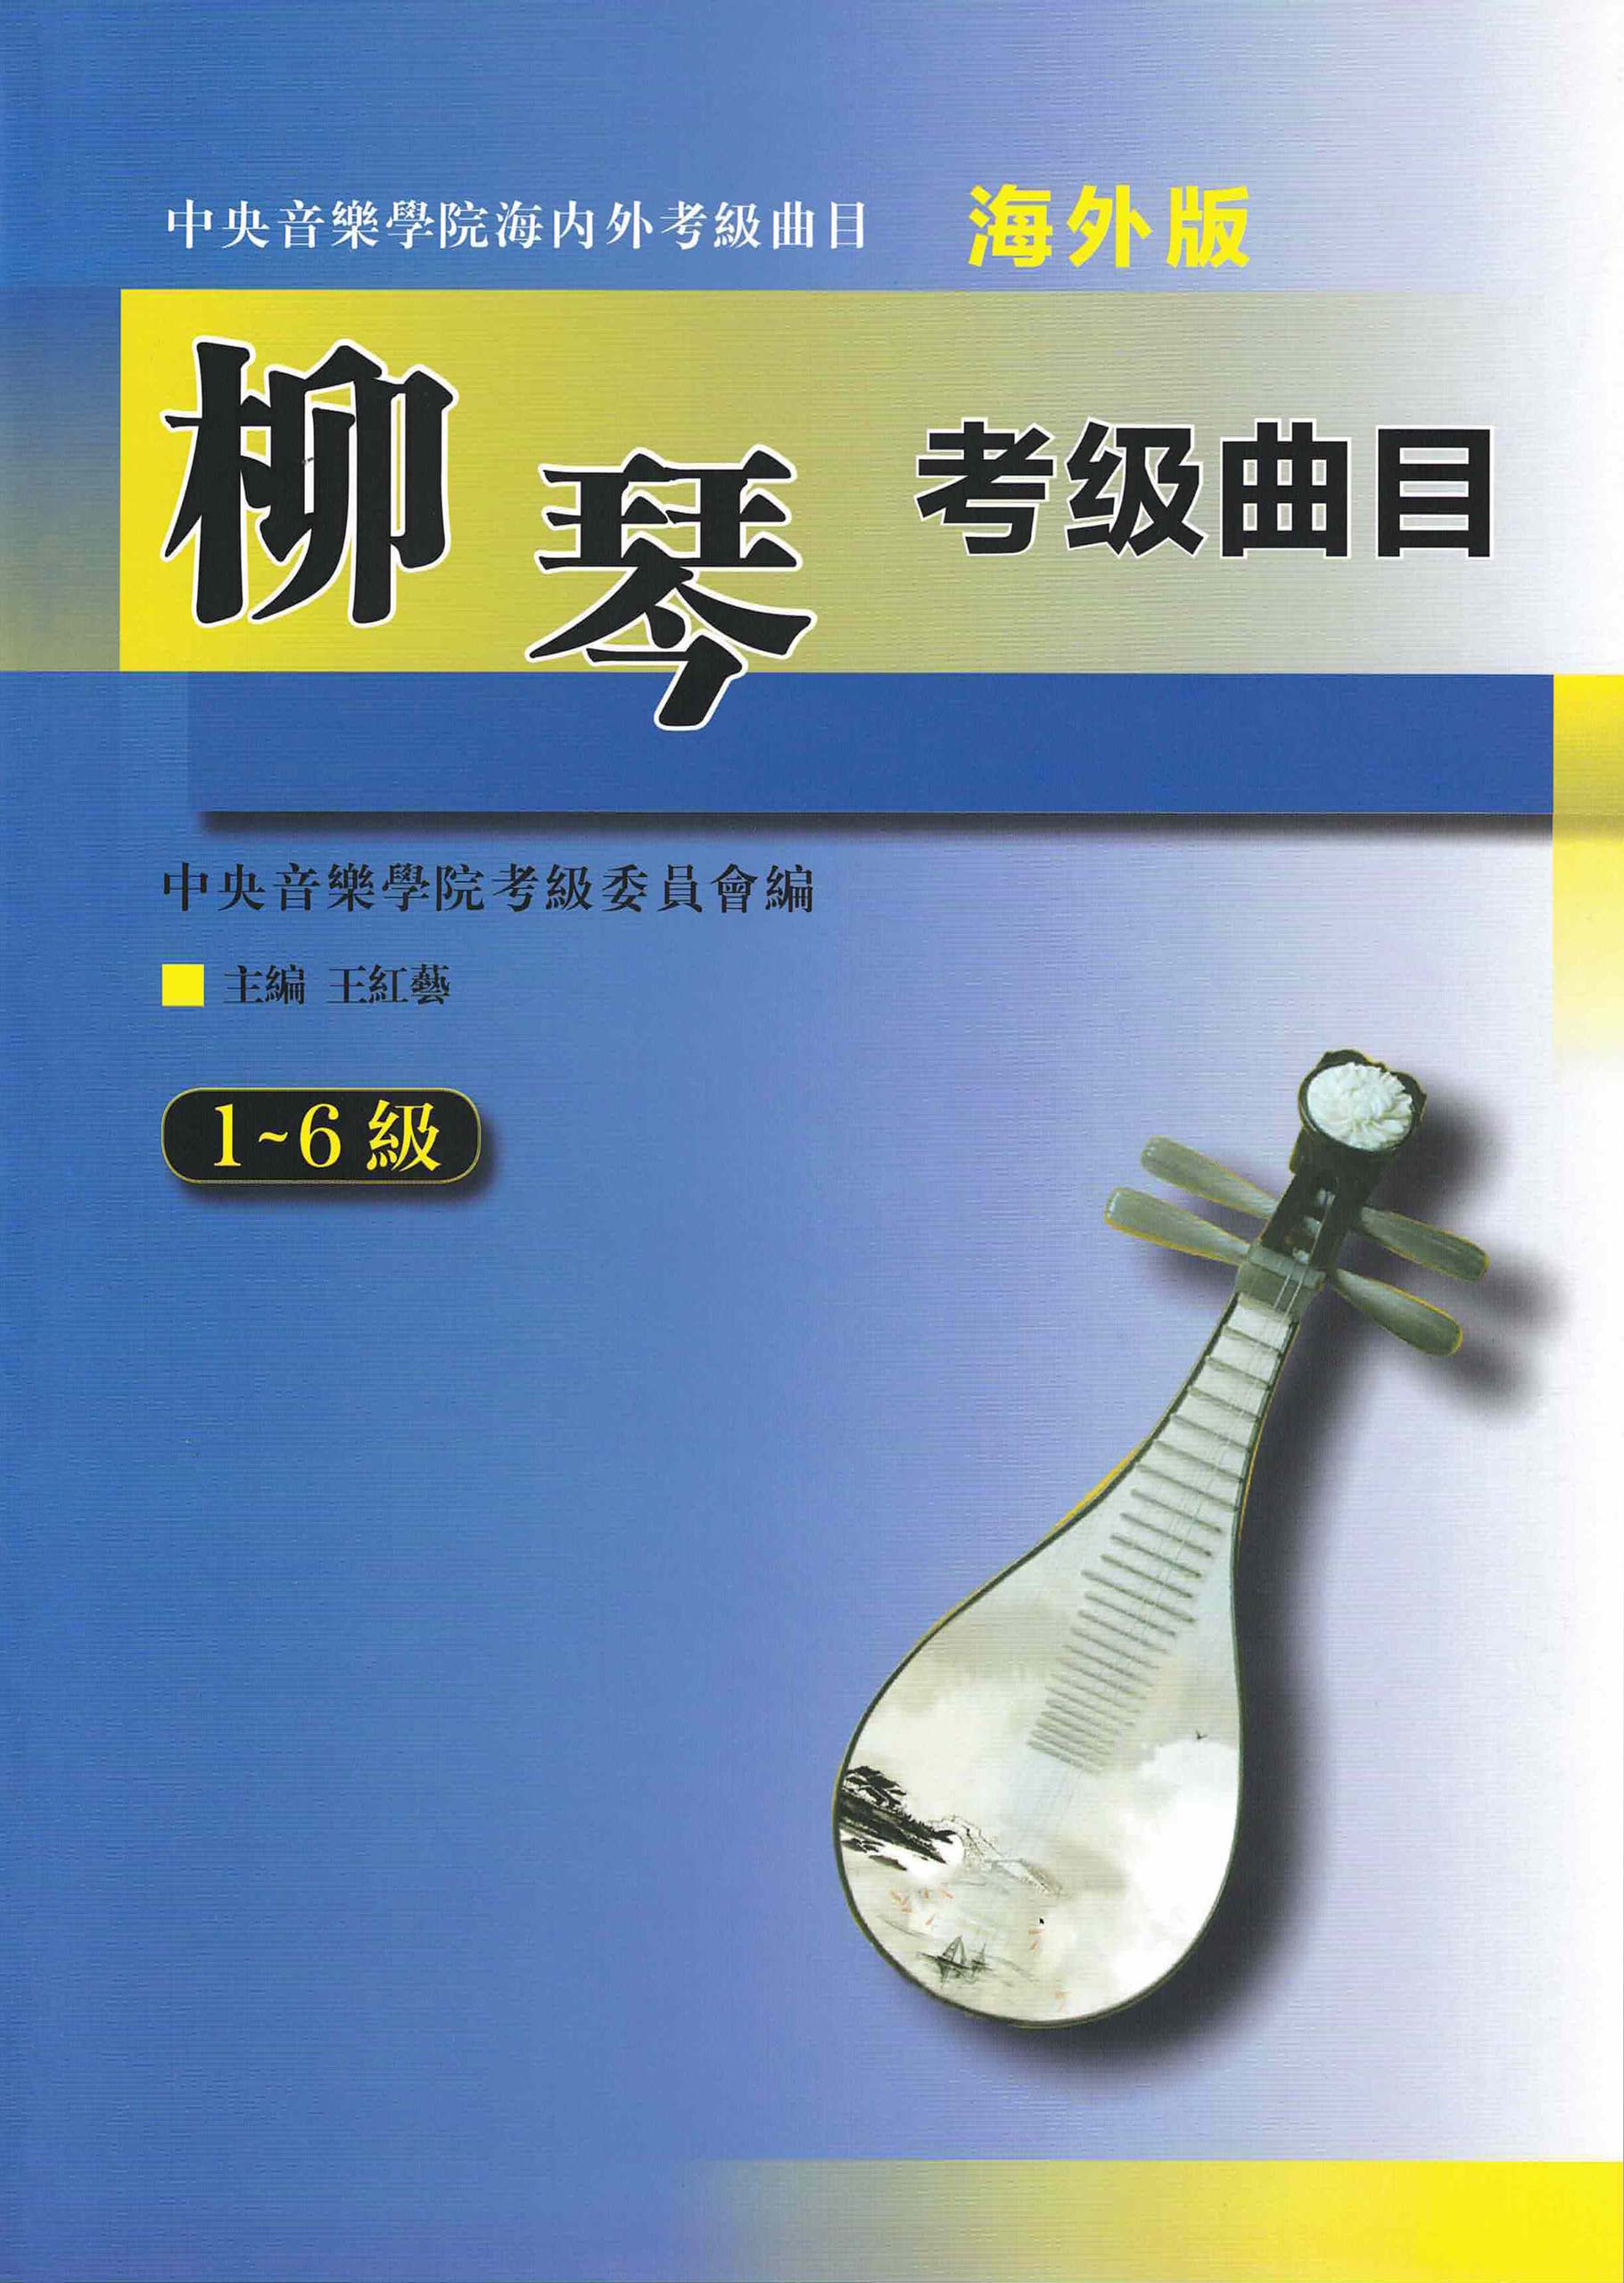 Liuqin Grading Examination Book by CCOM – NAFA (Beginner Grade 1-6) Cover Page